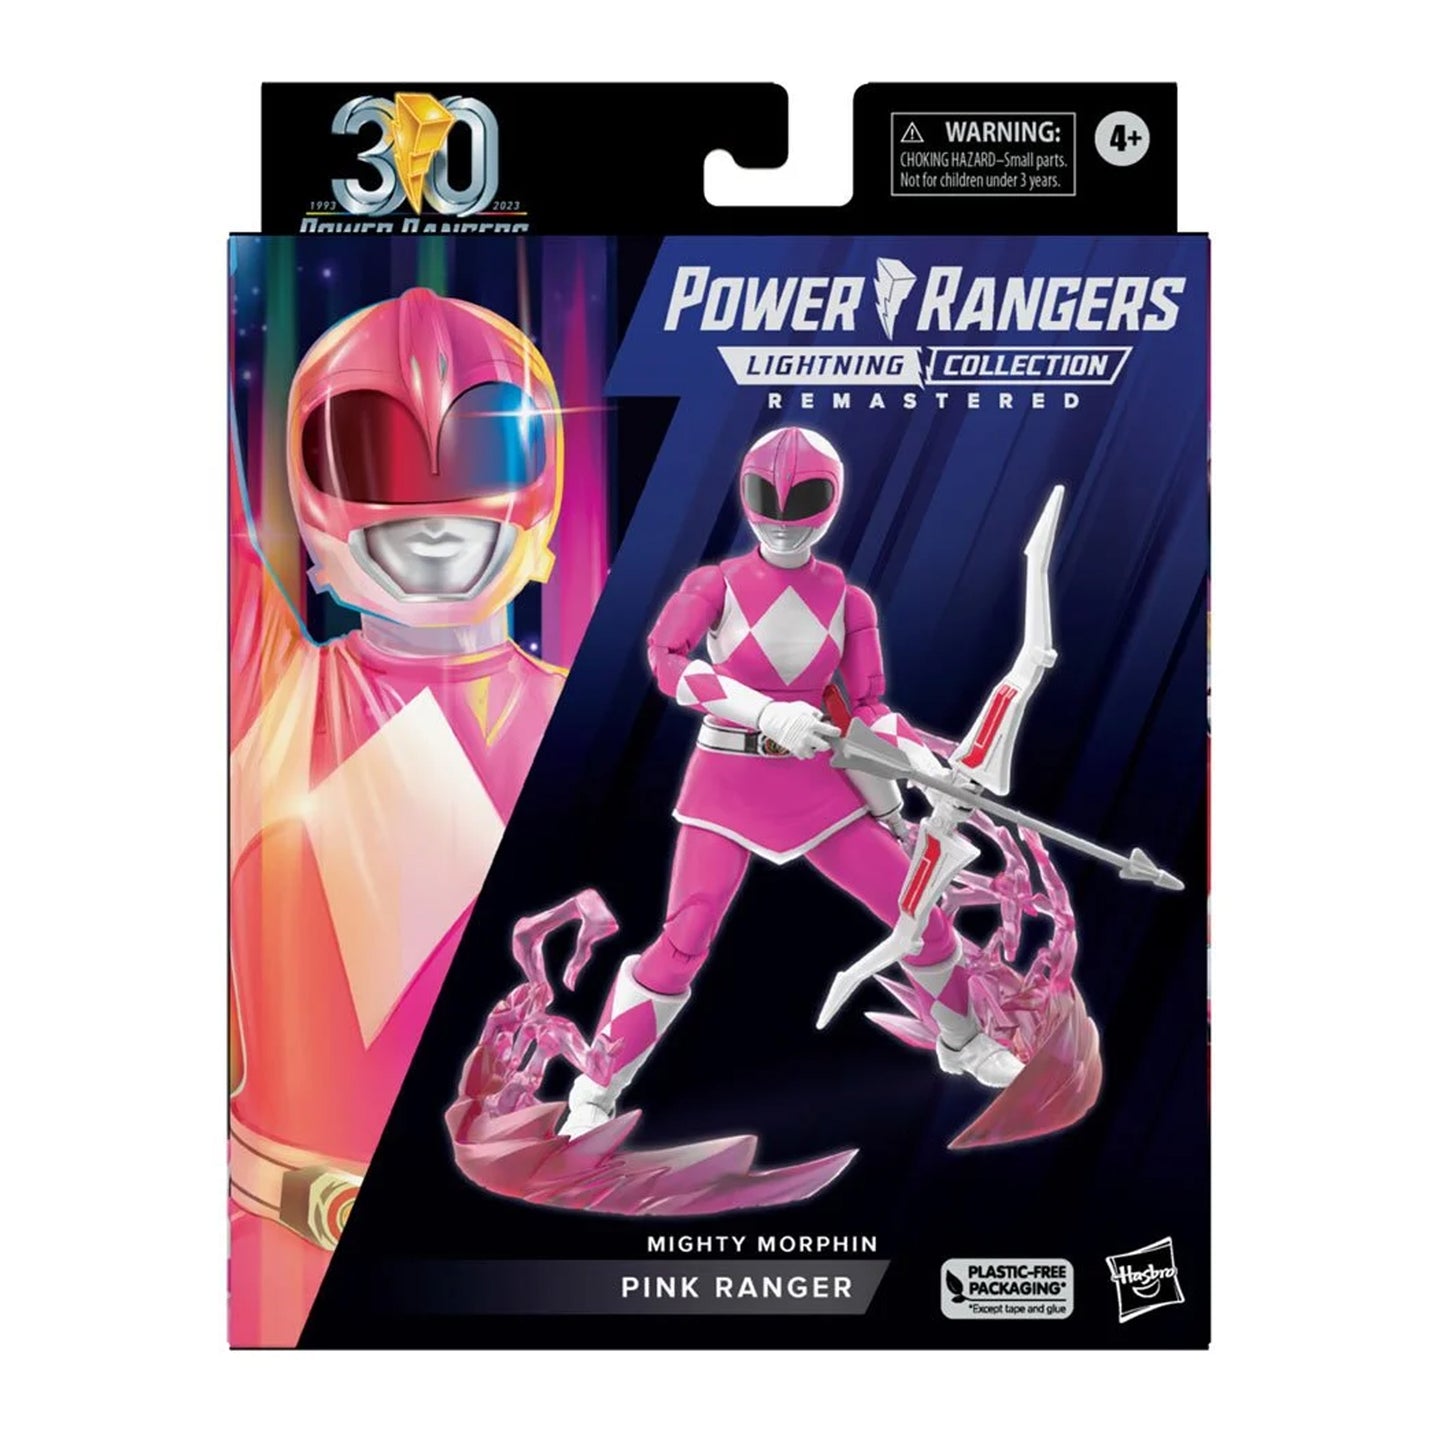 Power Rangers Lighting Collection REMASTERED Morphin Pink Ranger